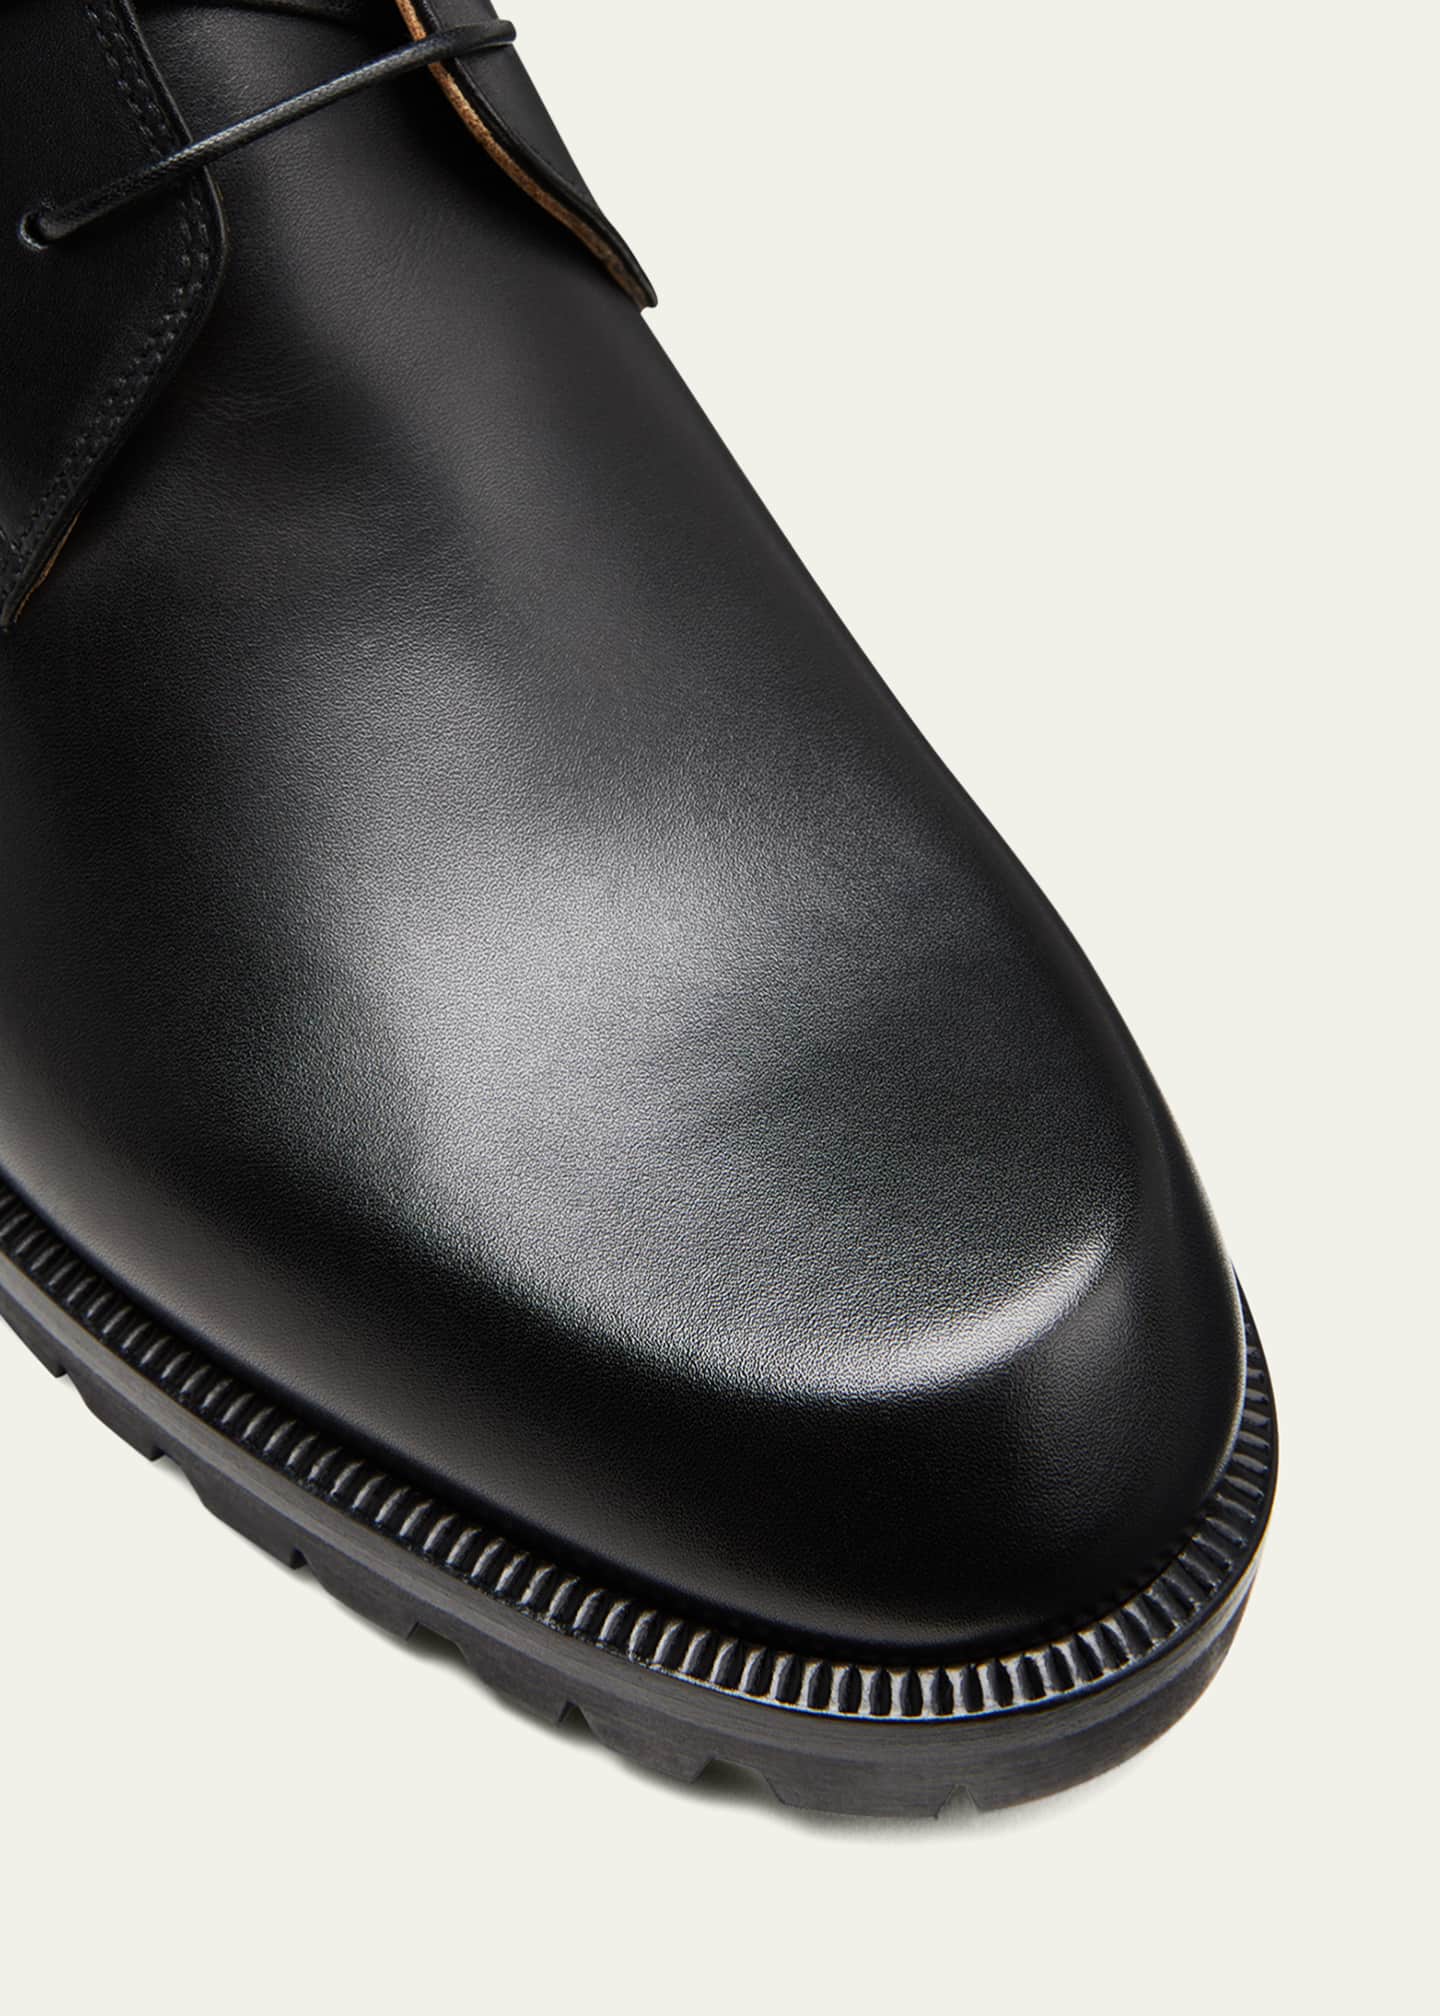 Christian Louboutin Men's Trapman Leather Hiking Boots - Black - Size 44.5 (11.5)